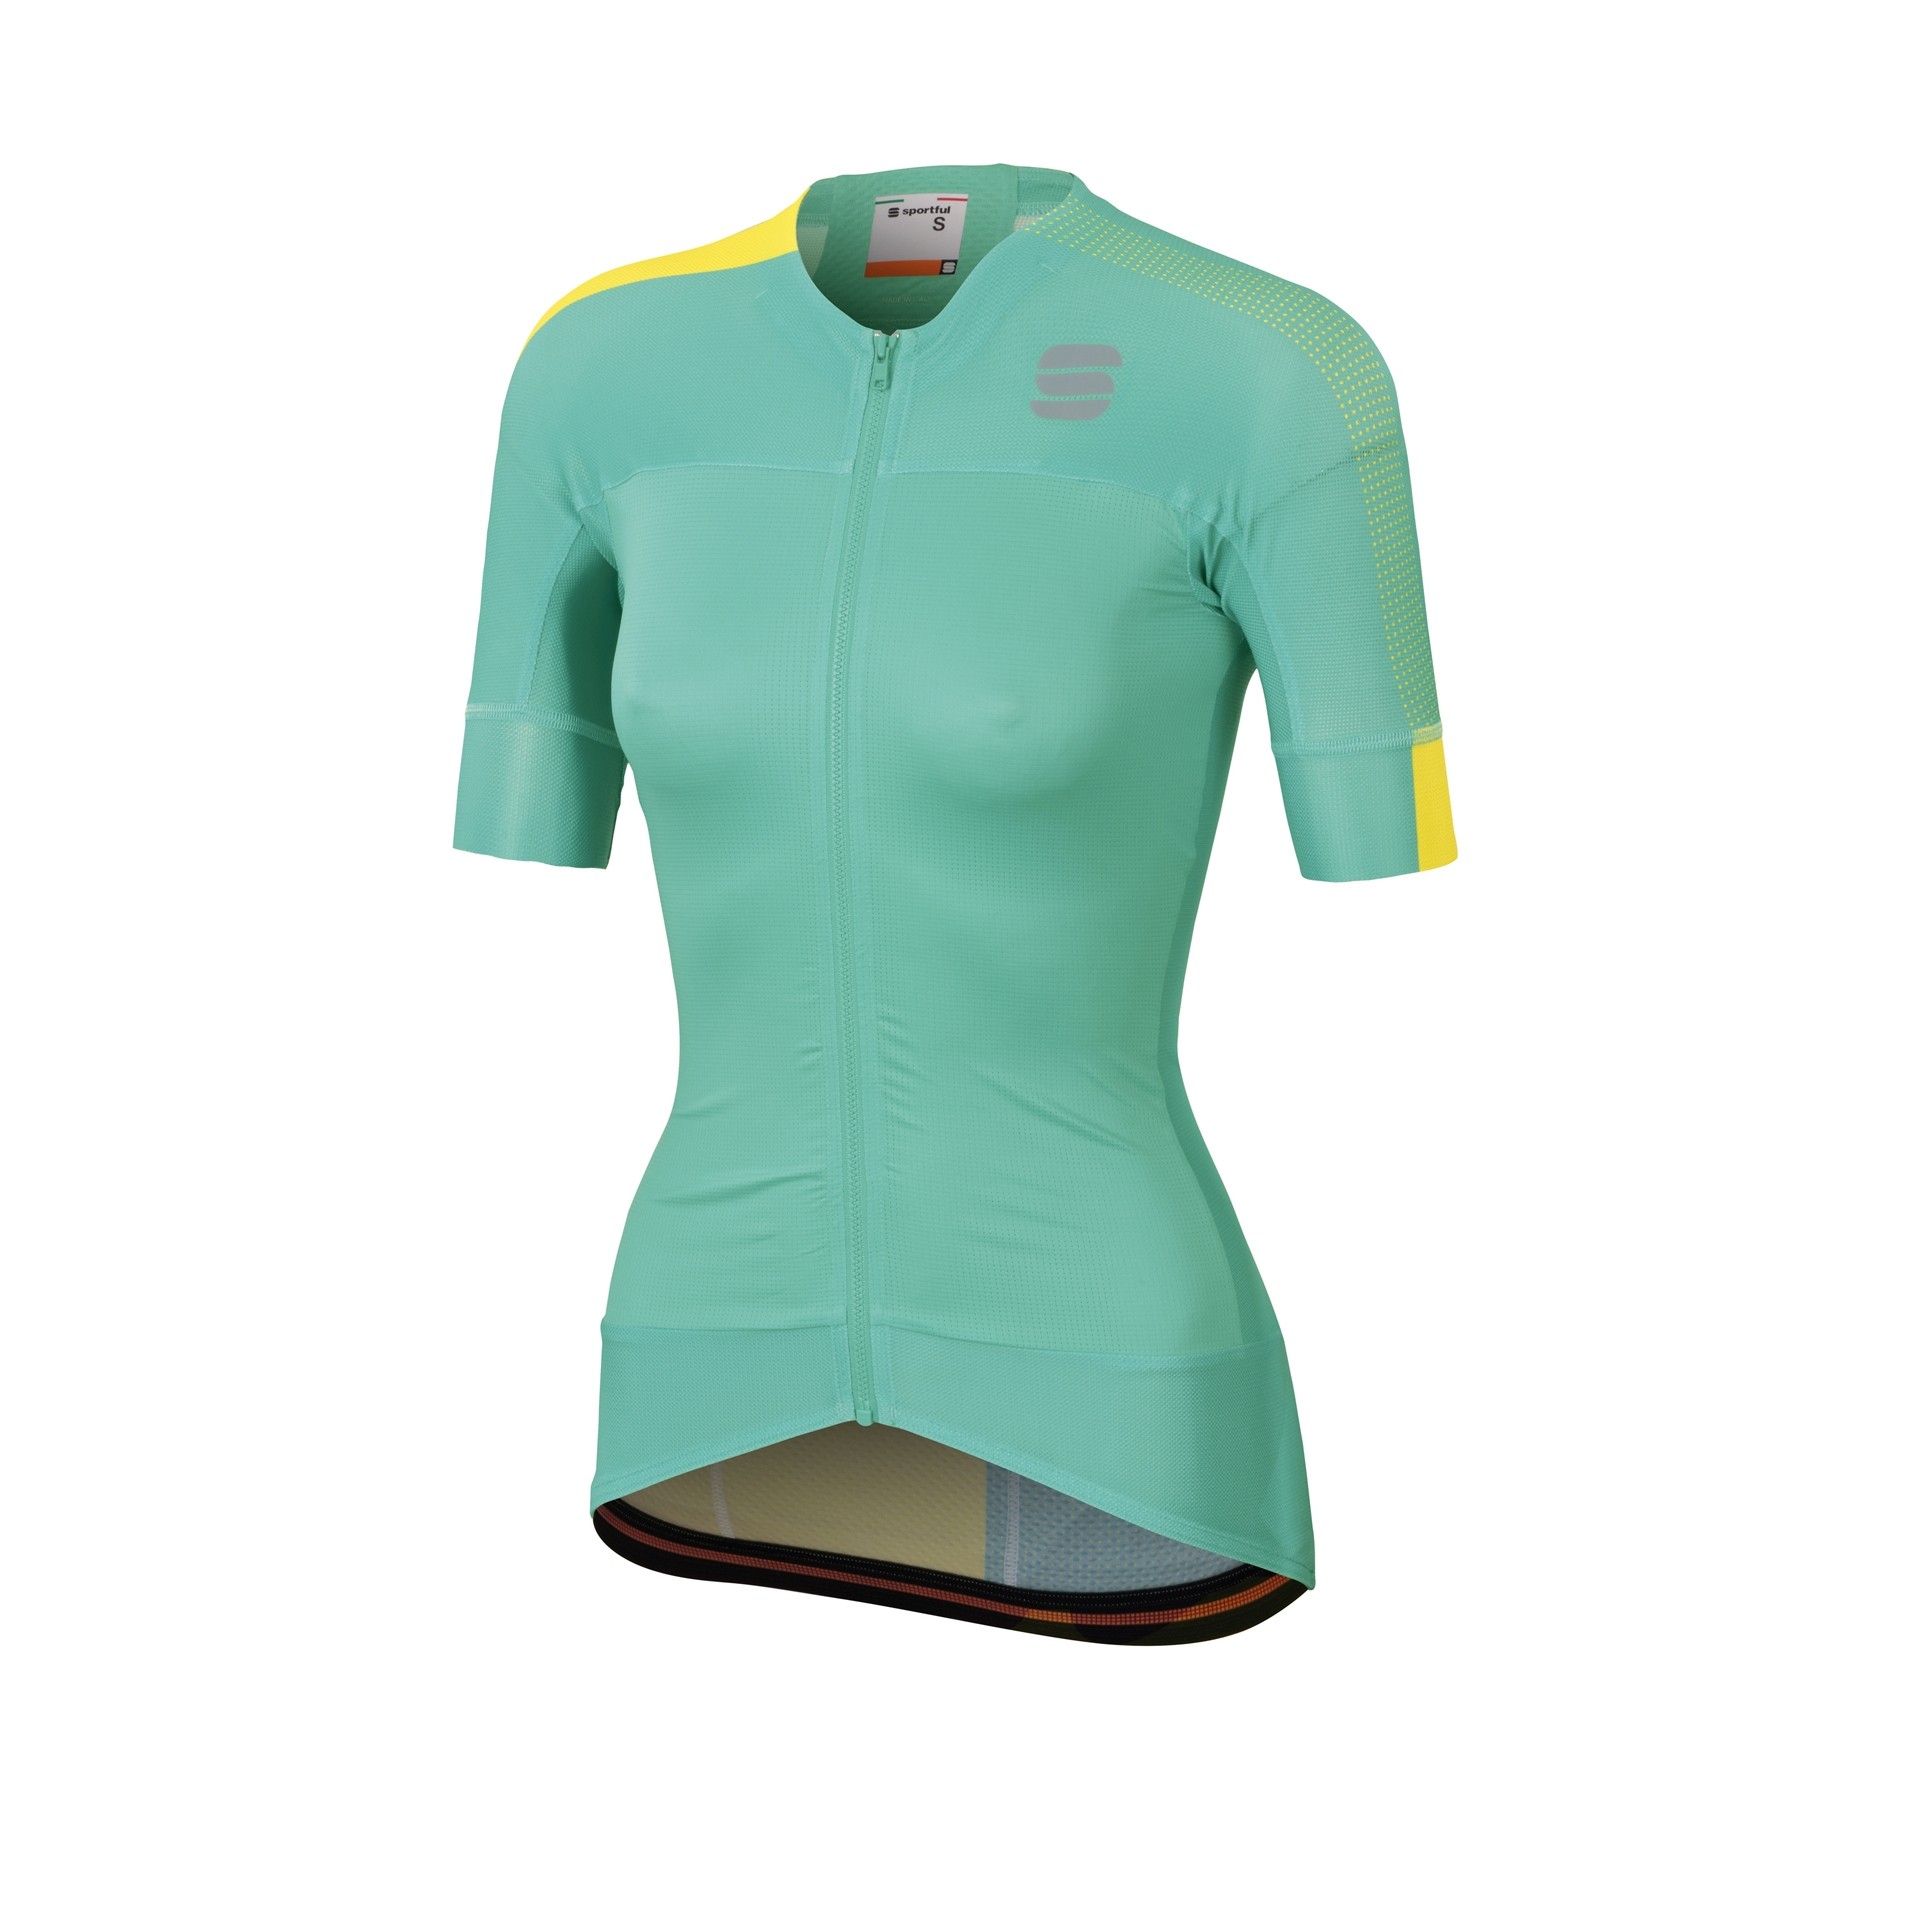 Sportful bodyfit pro 2.0 evo maillot de cyclisme manches courtes femme miami vert tweety jaune